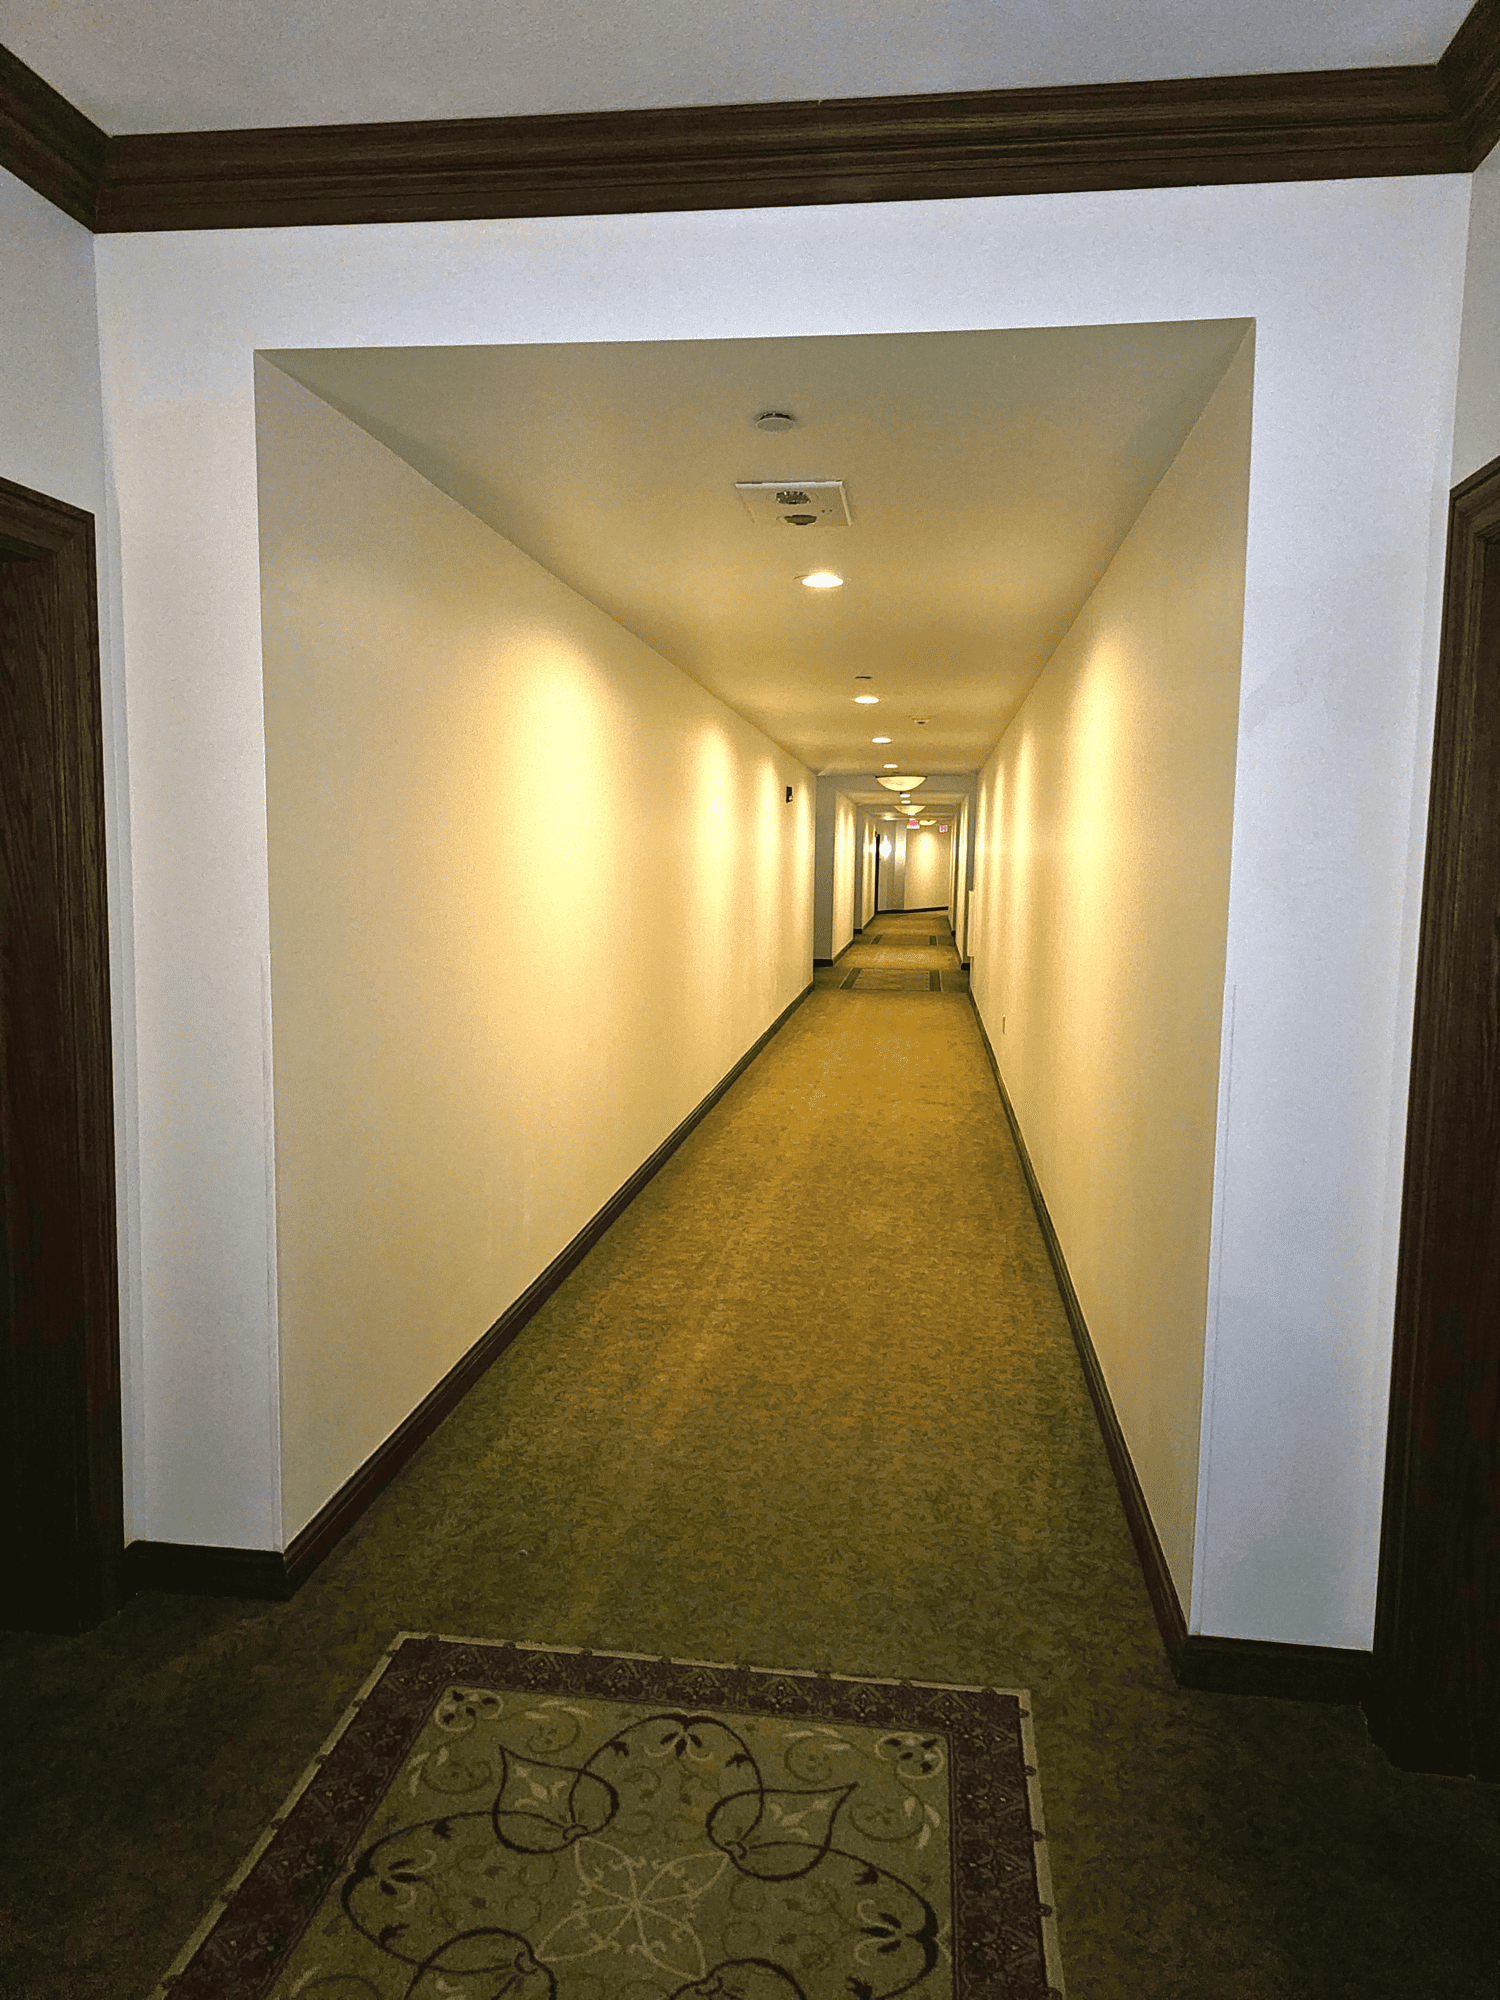 White corridor with warm lighting